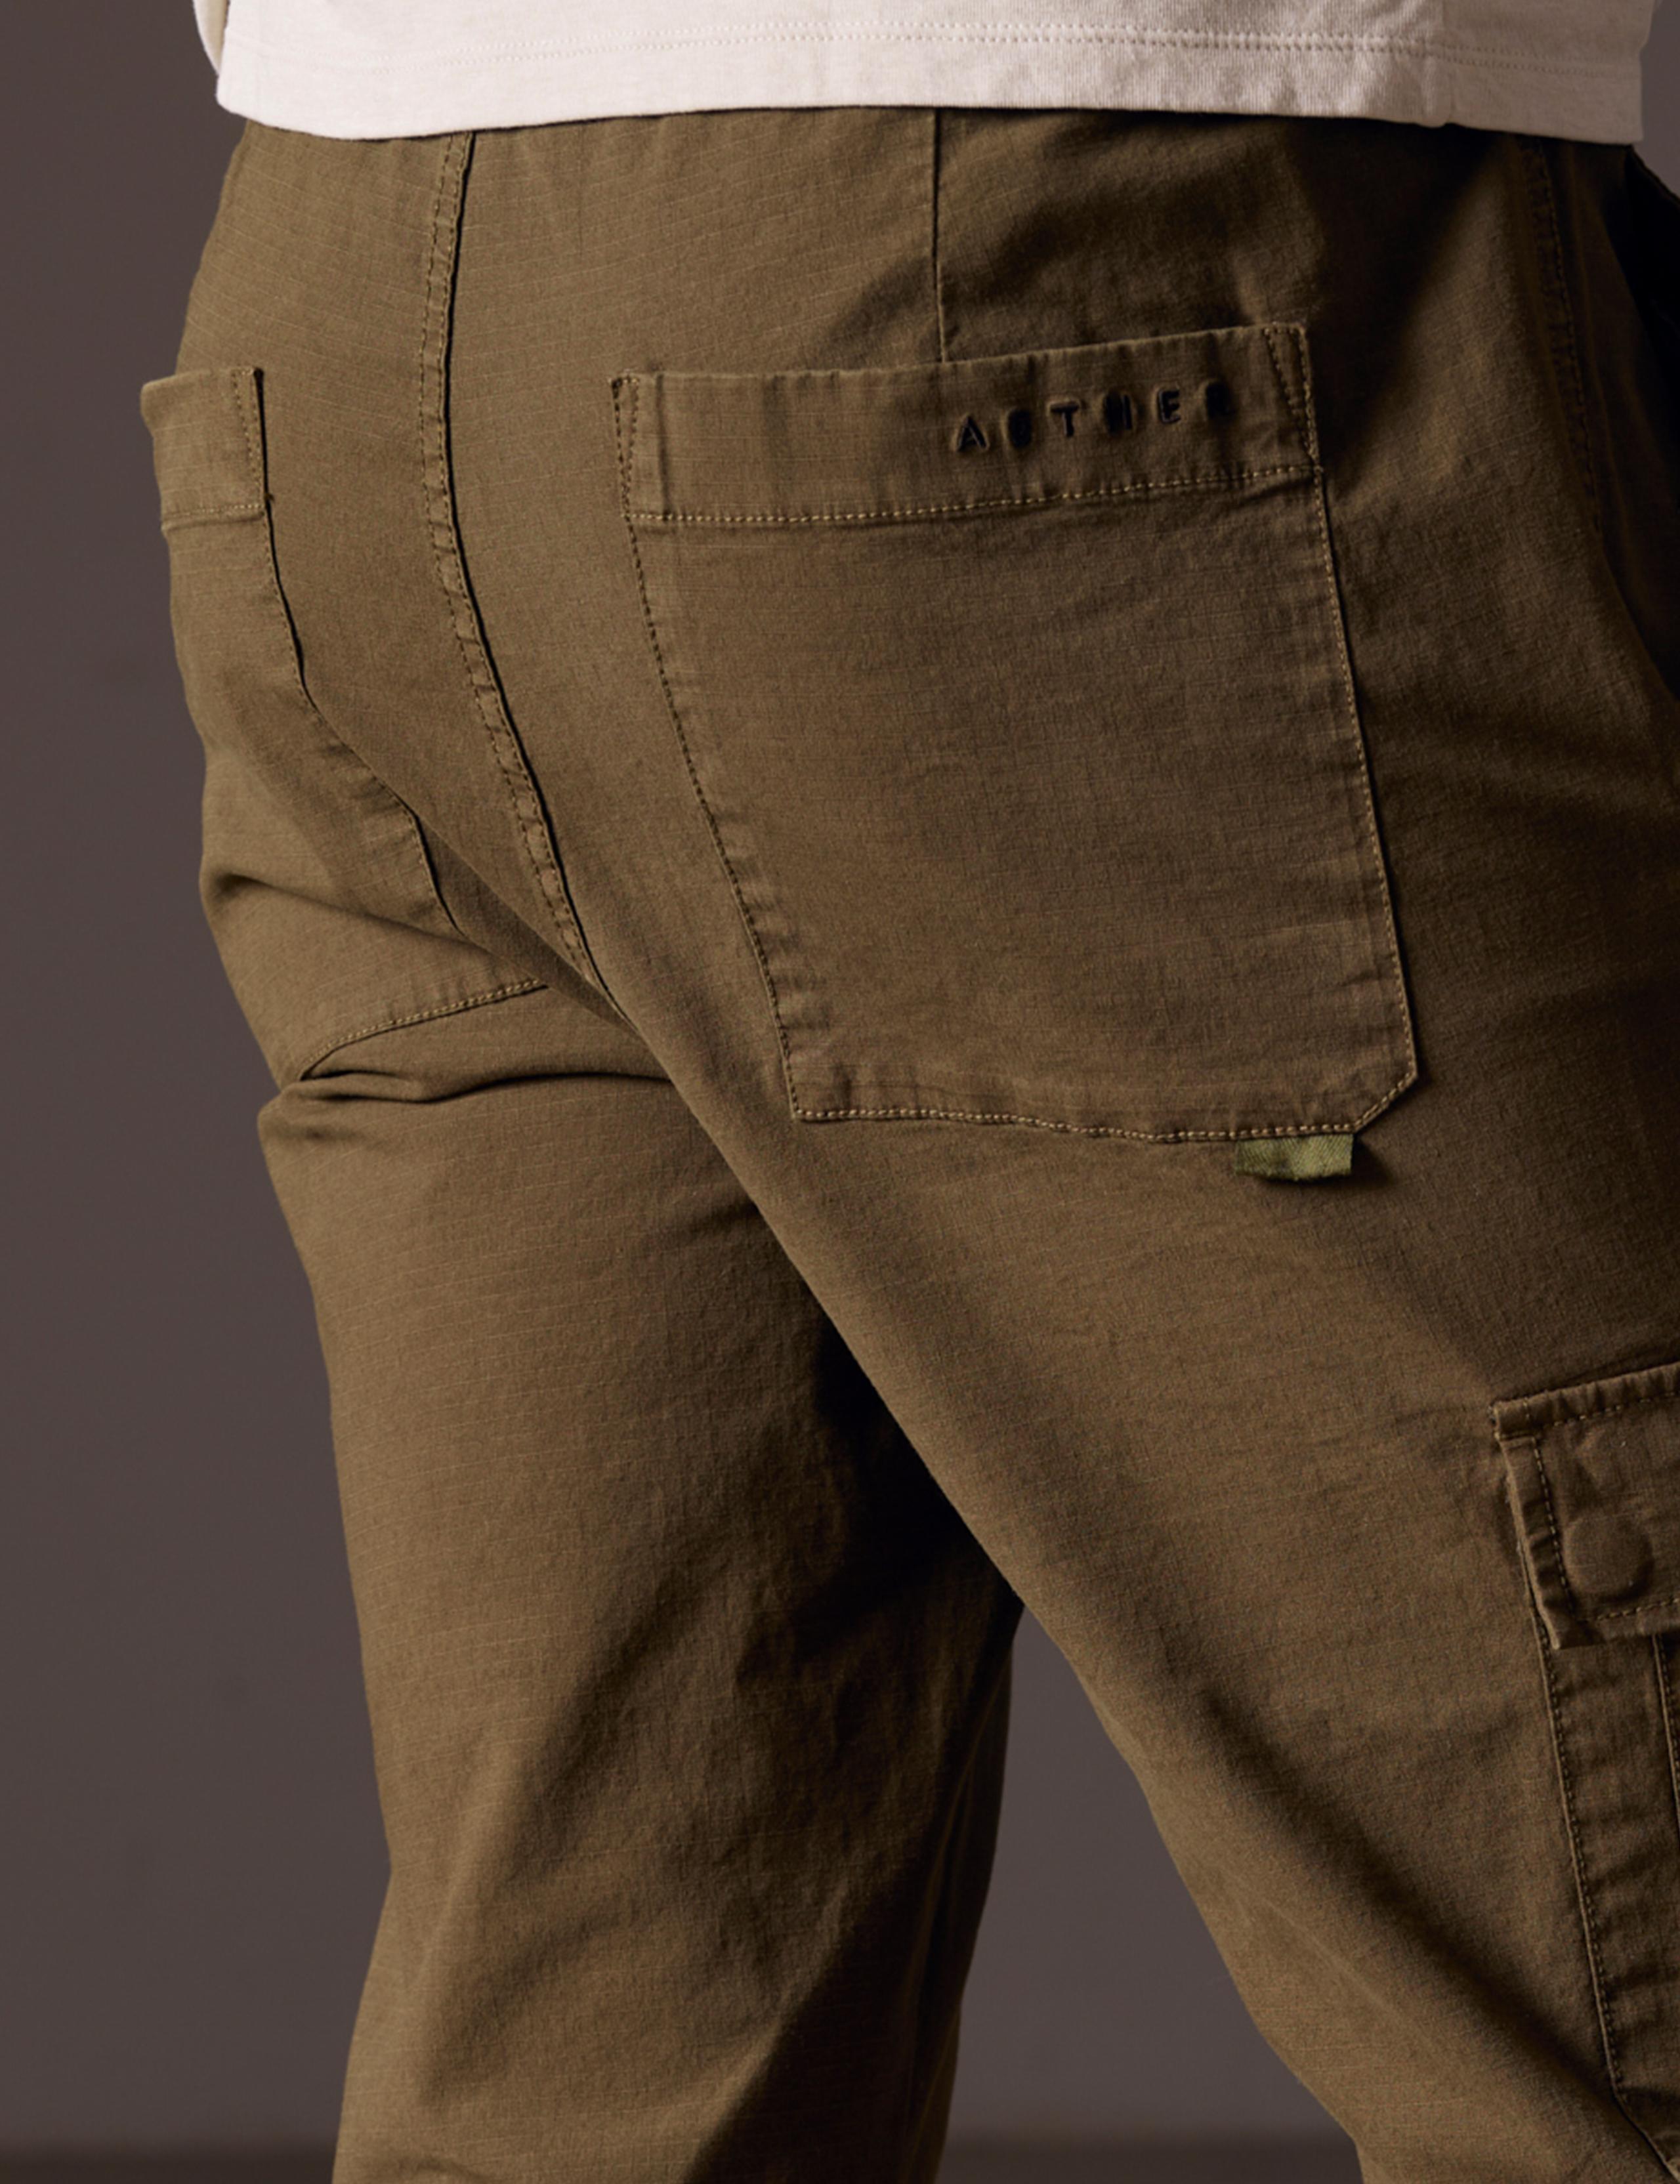 Close-up of Norton Cotton Ripstop Pant back pocket